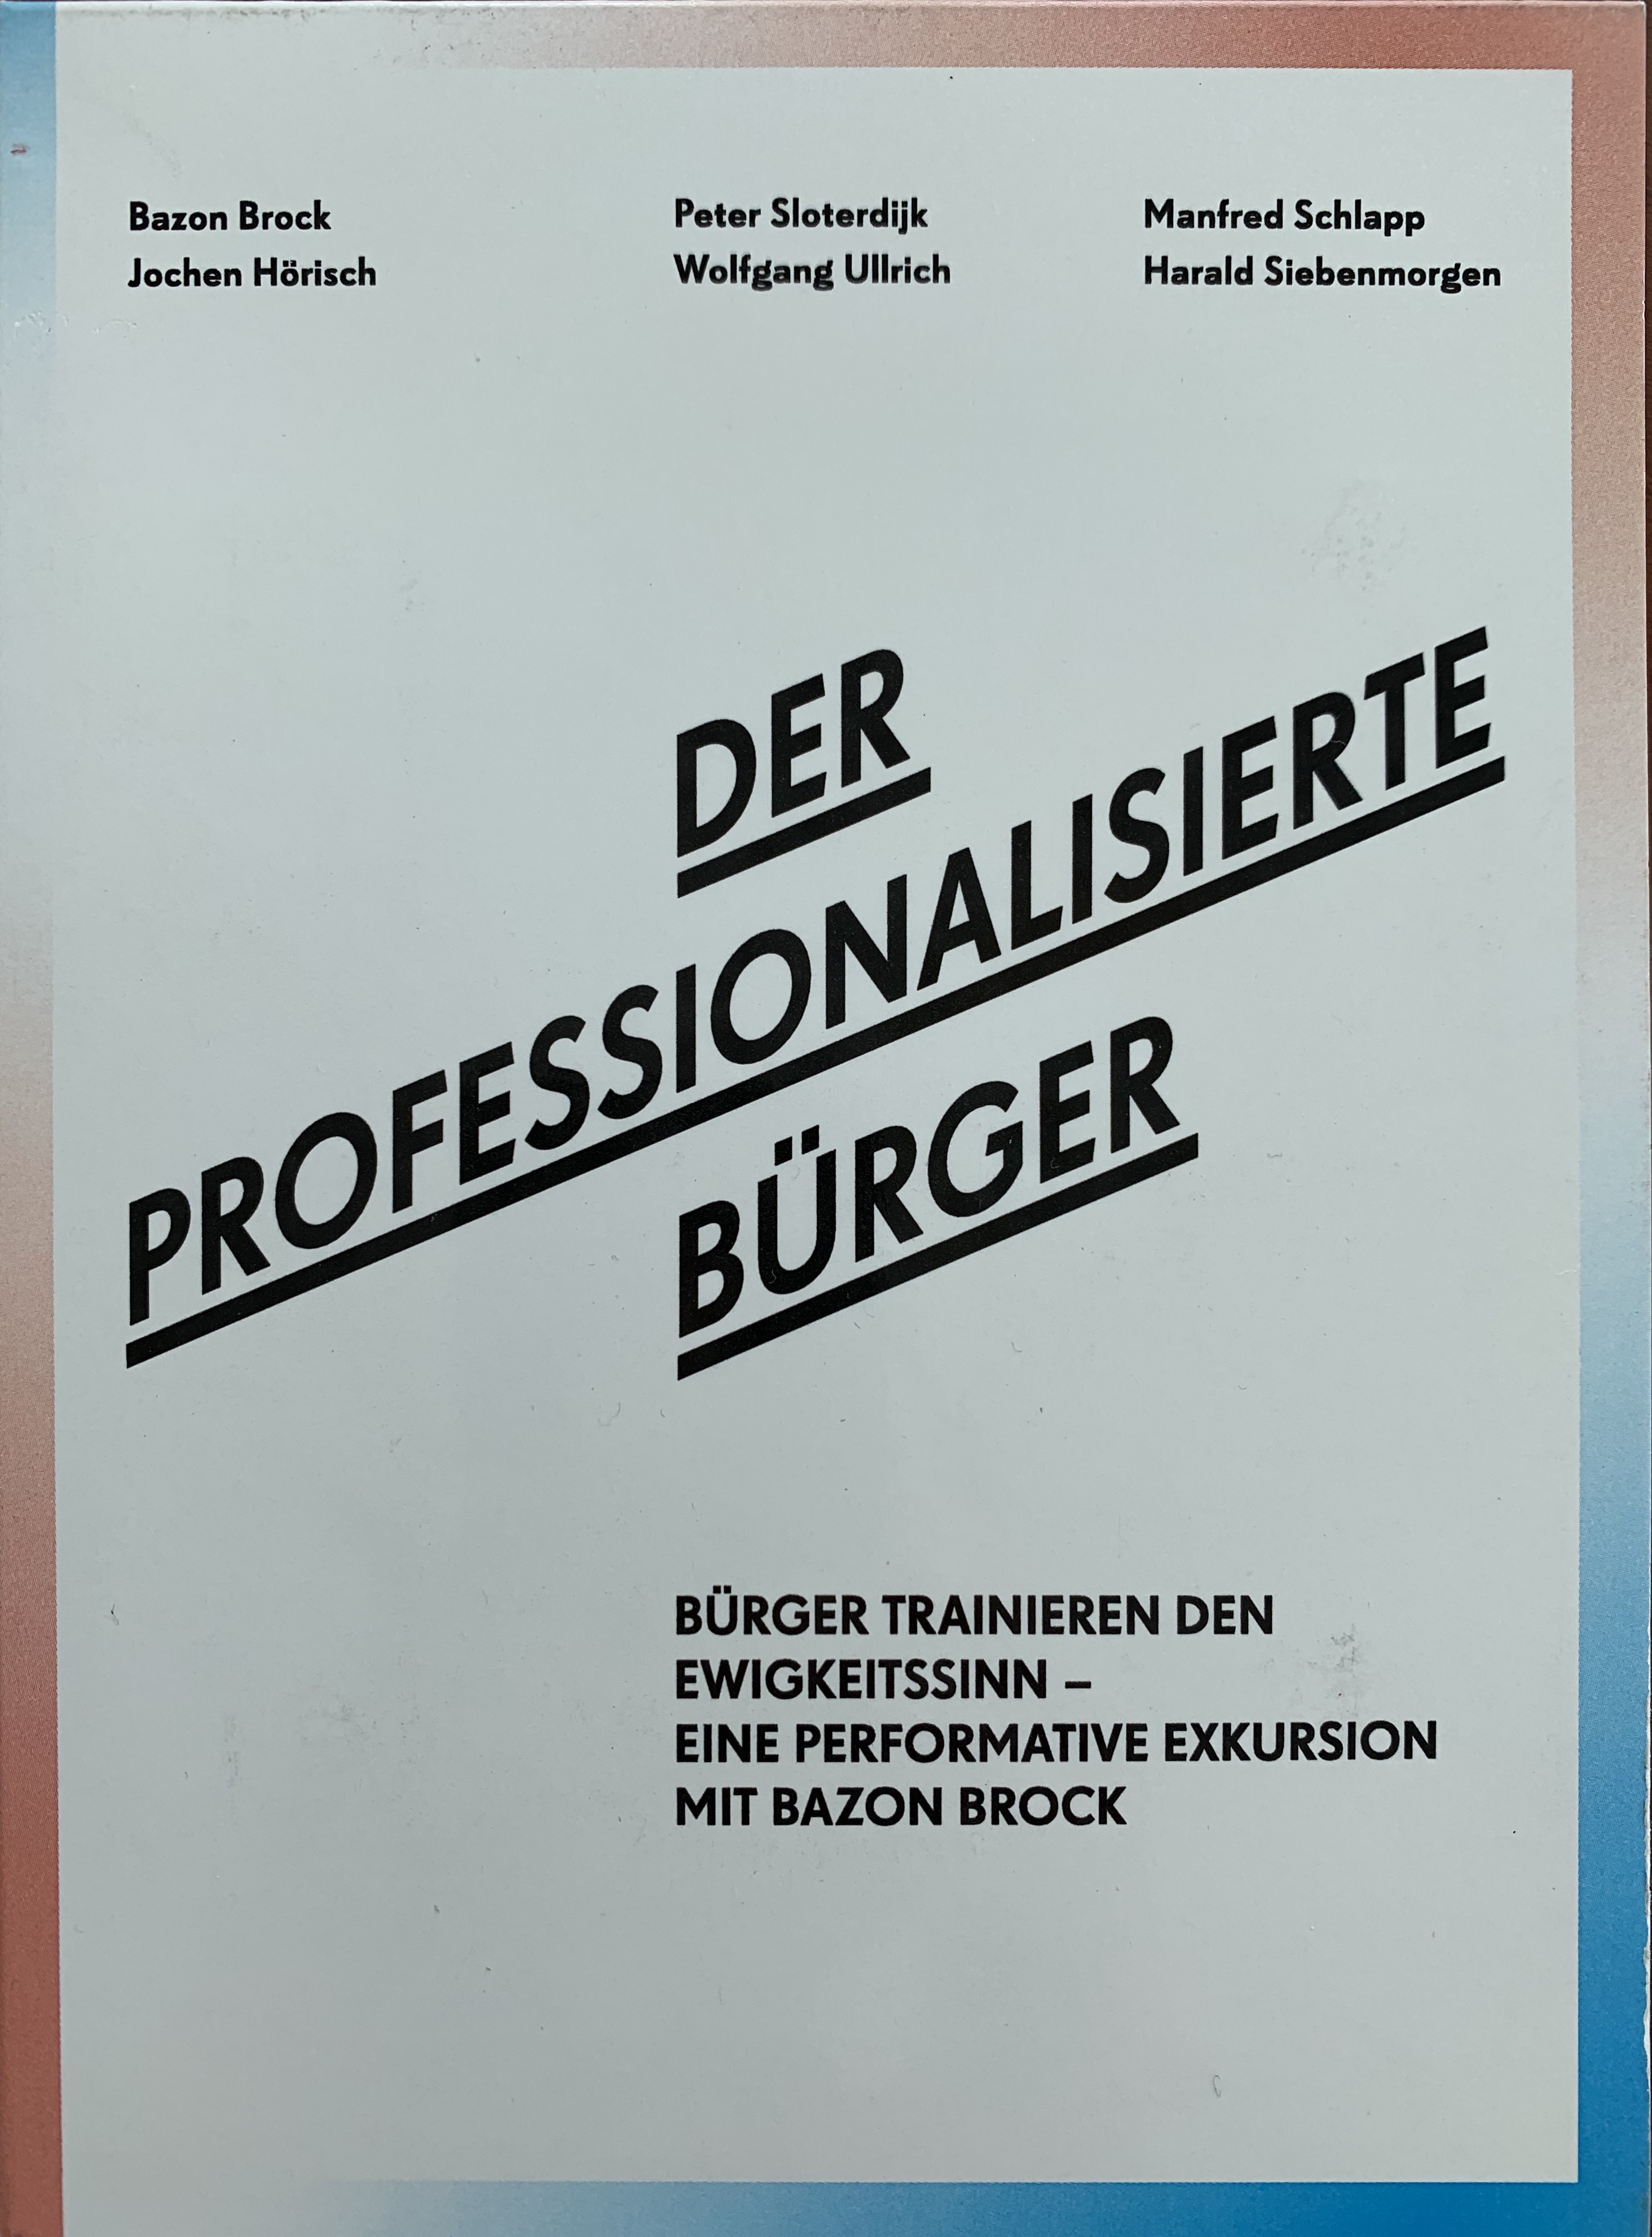 Der professionalisierte Bürger. 2 DVDs, Karlsruhe 2011